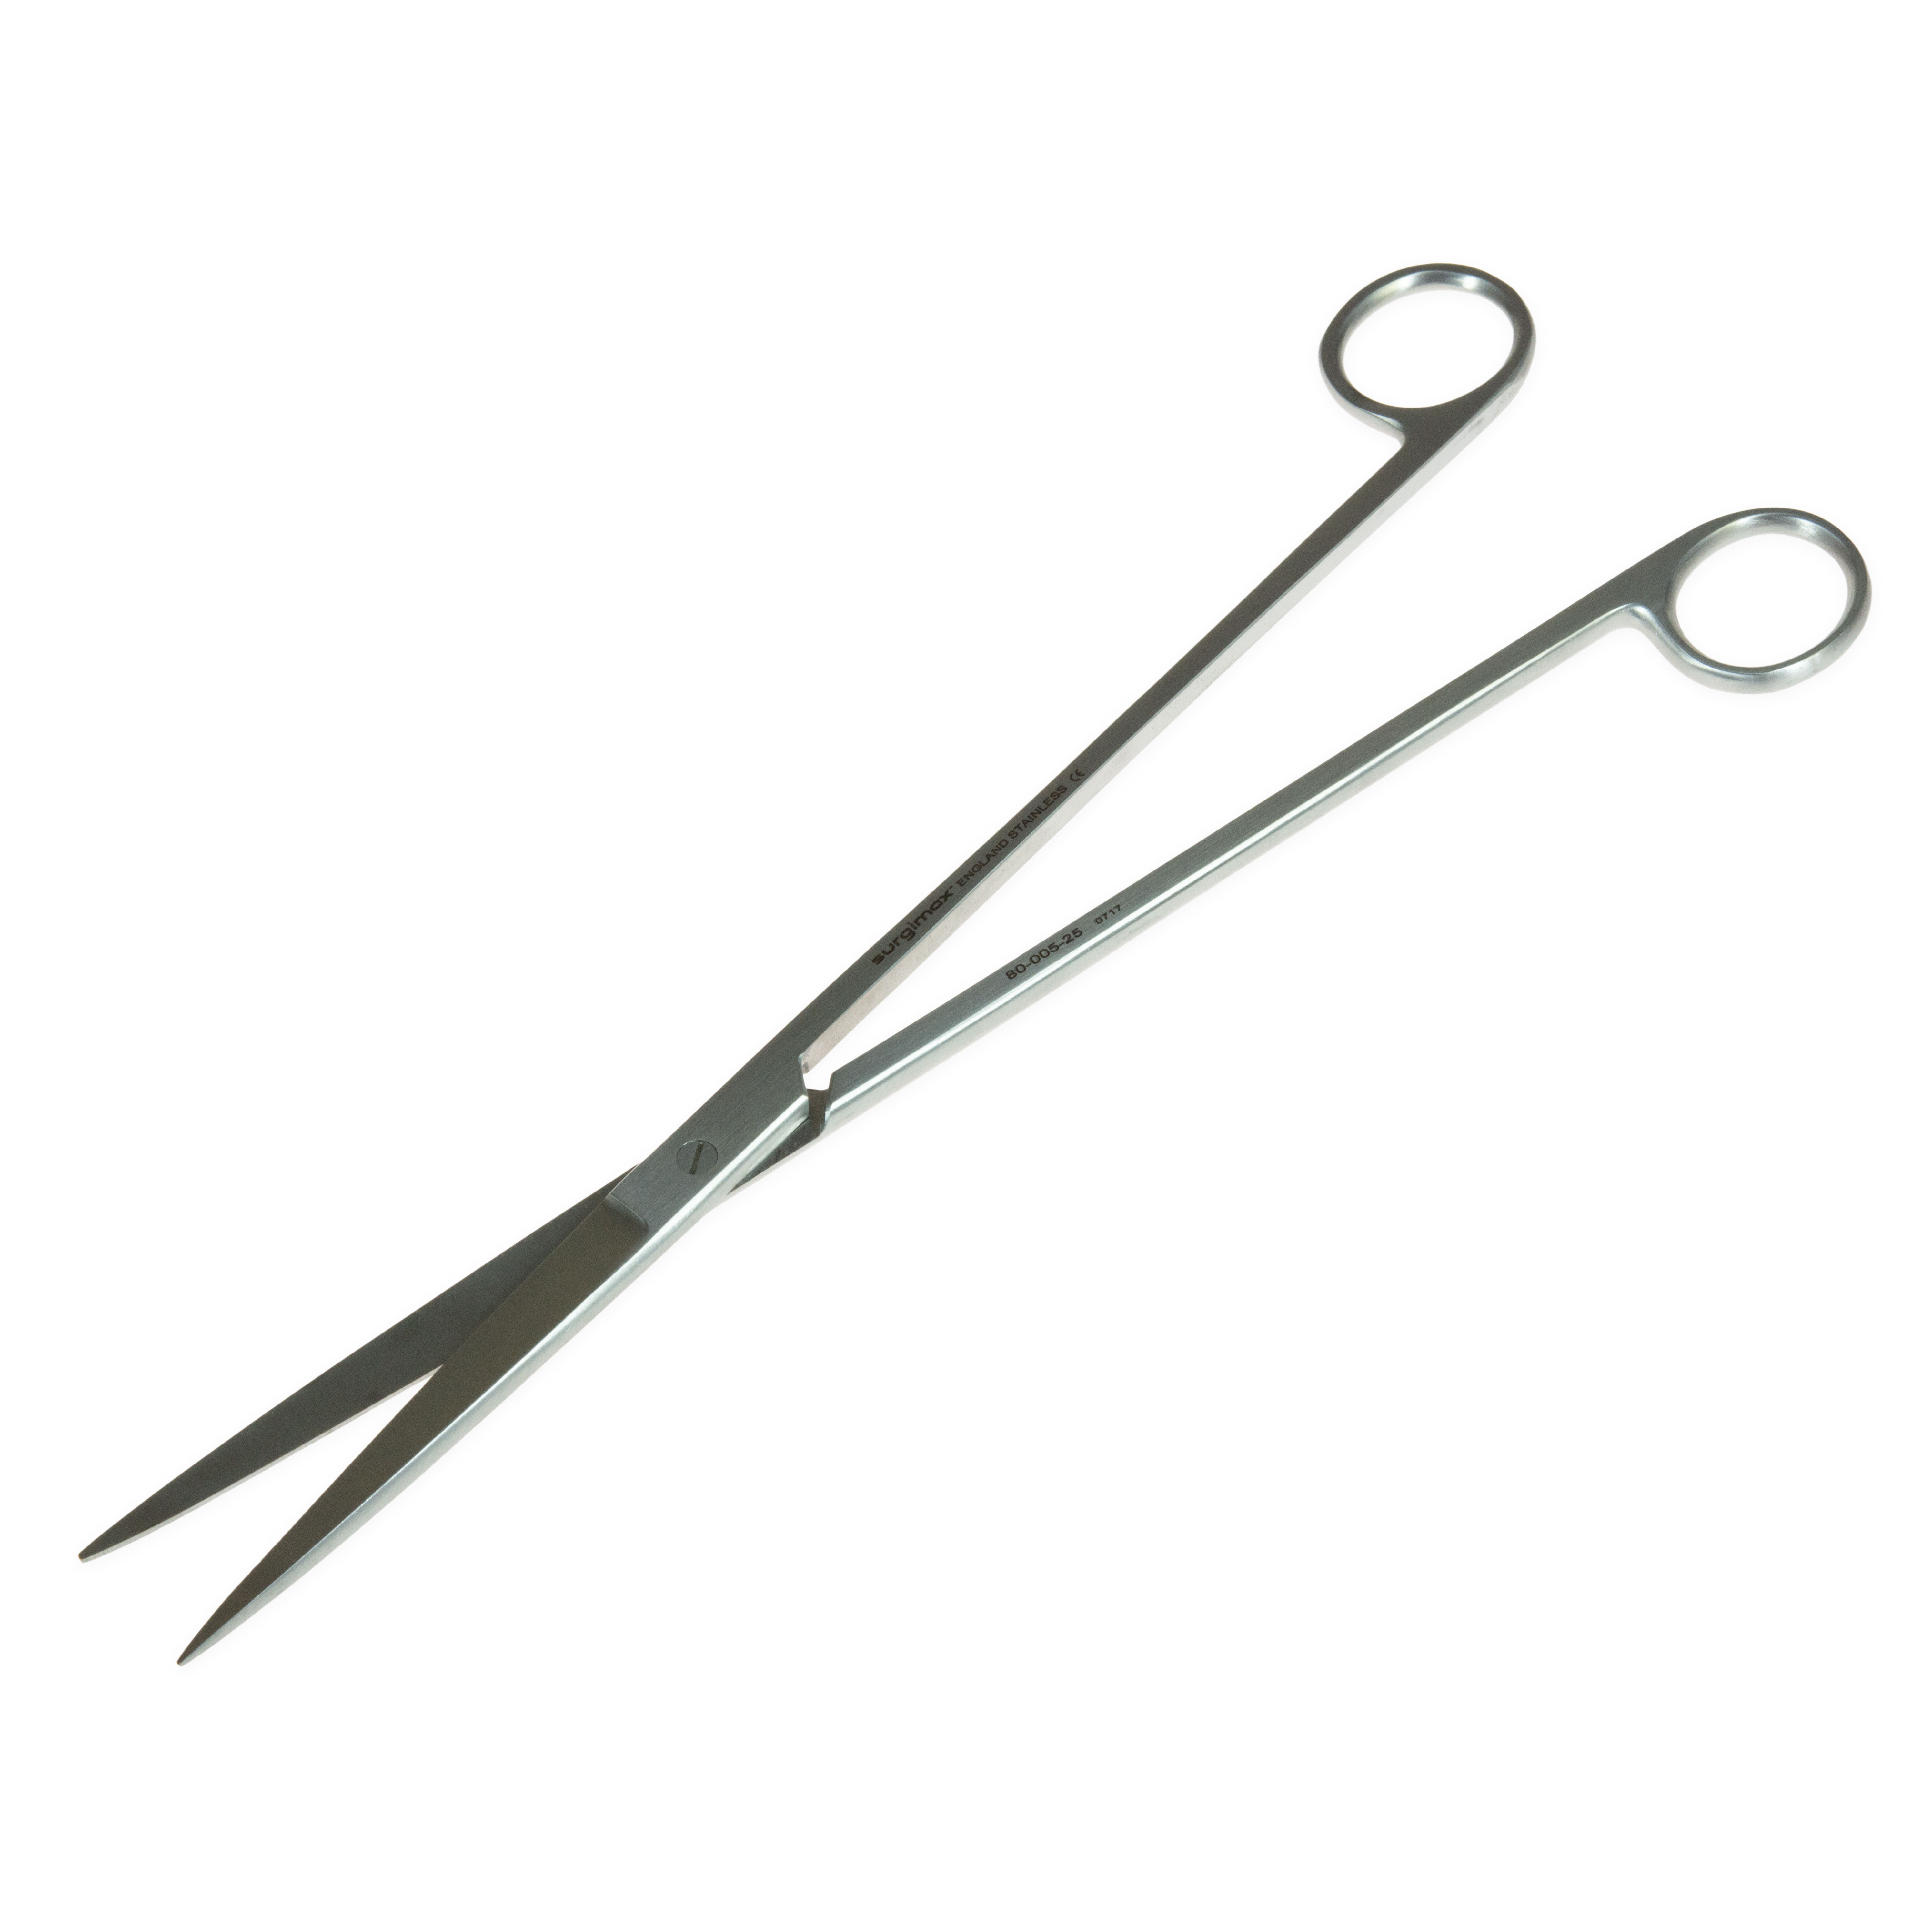 Most versatile scissors 25 cm long open